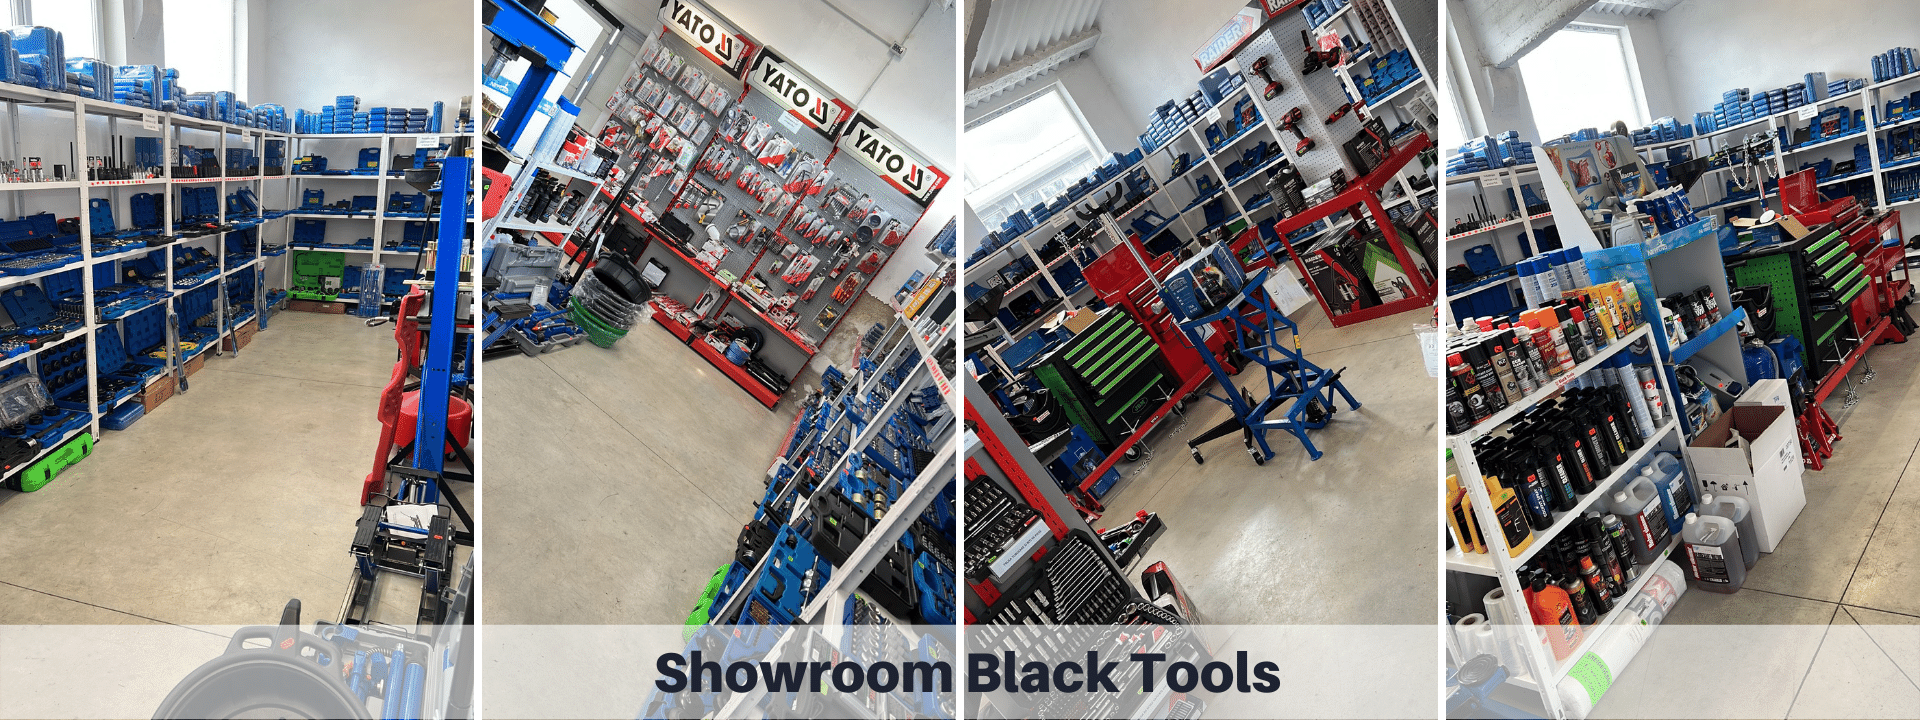 Showroom black tools